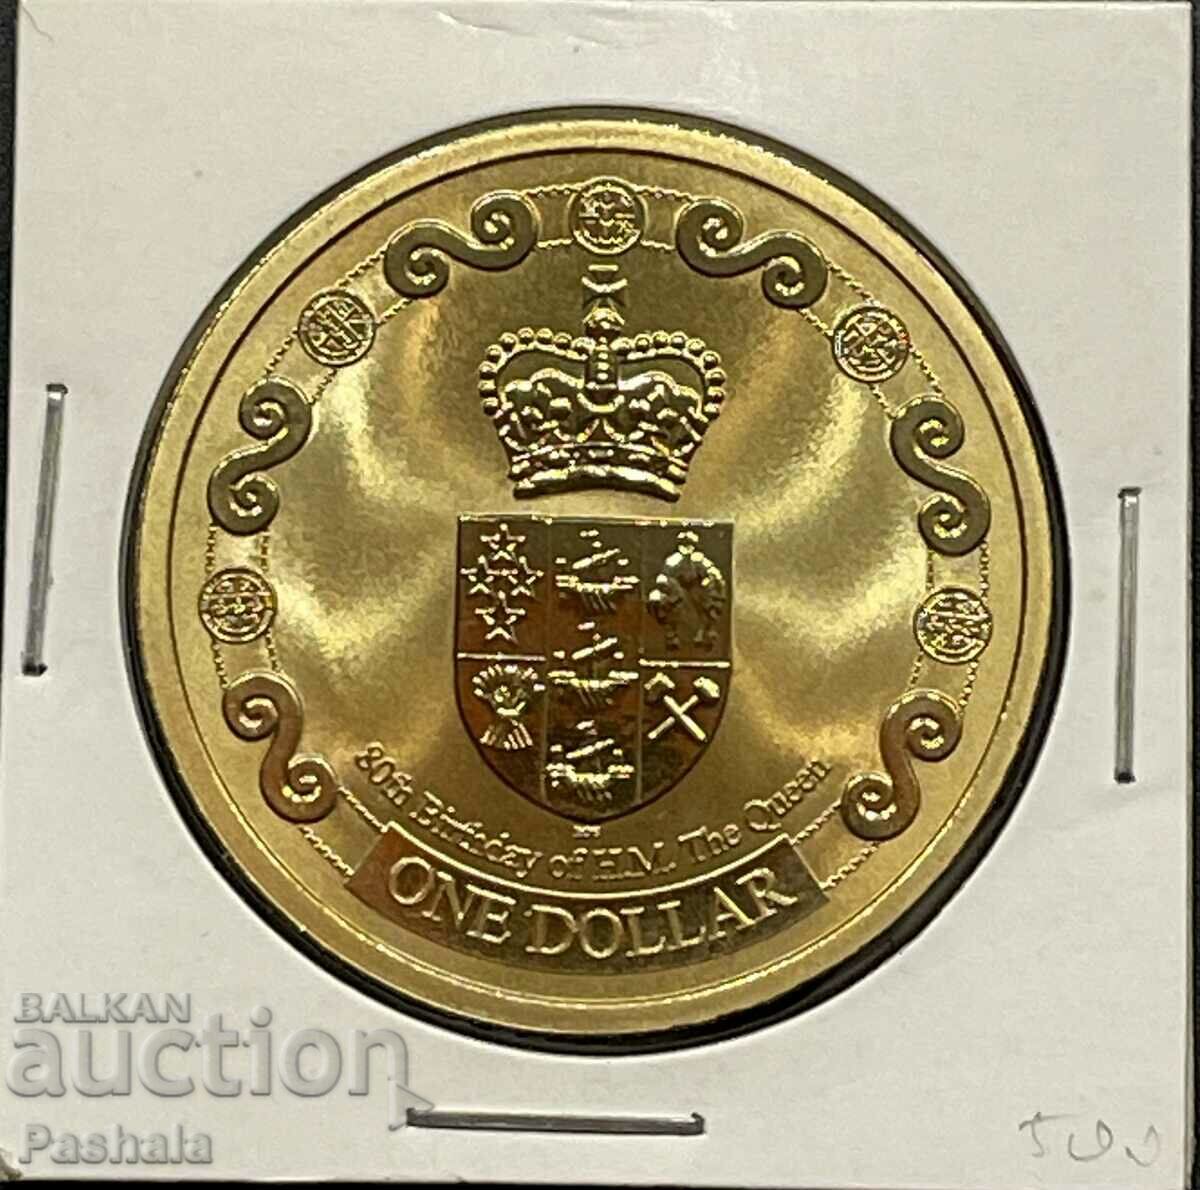 New Zealand $1 2006